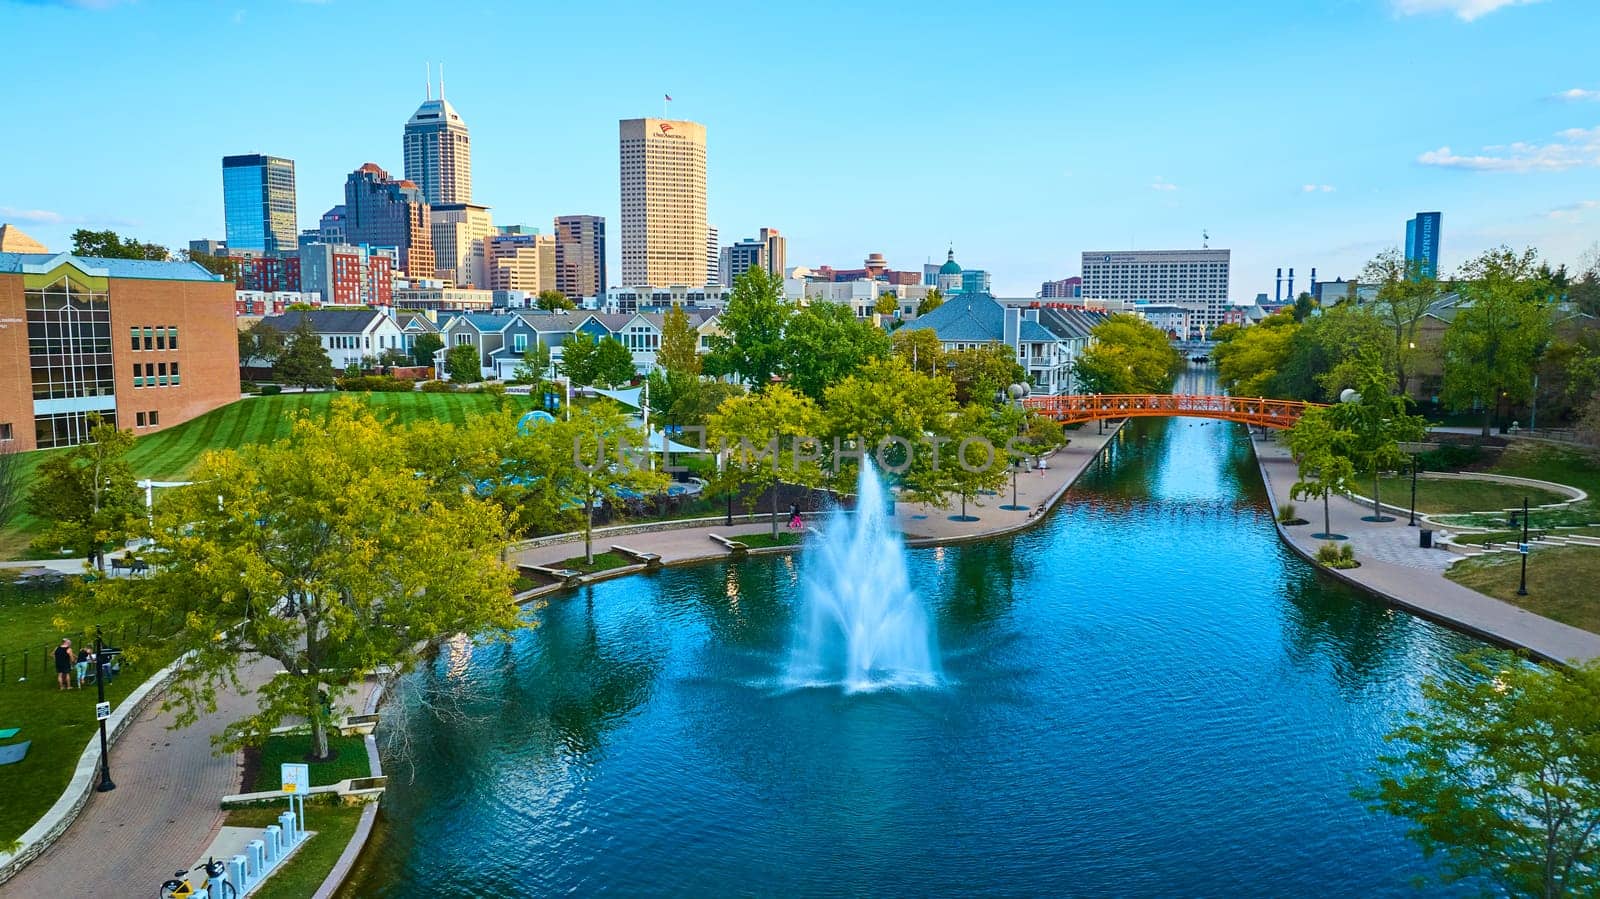 Vibrant Urban Park with Fountain and Orange Pedestrian Bridge against Indianapolis Skyline, Aerial View